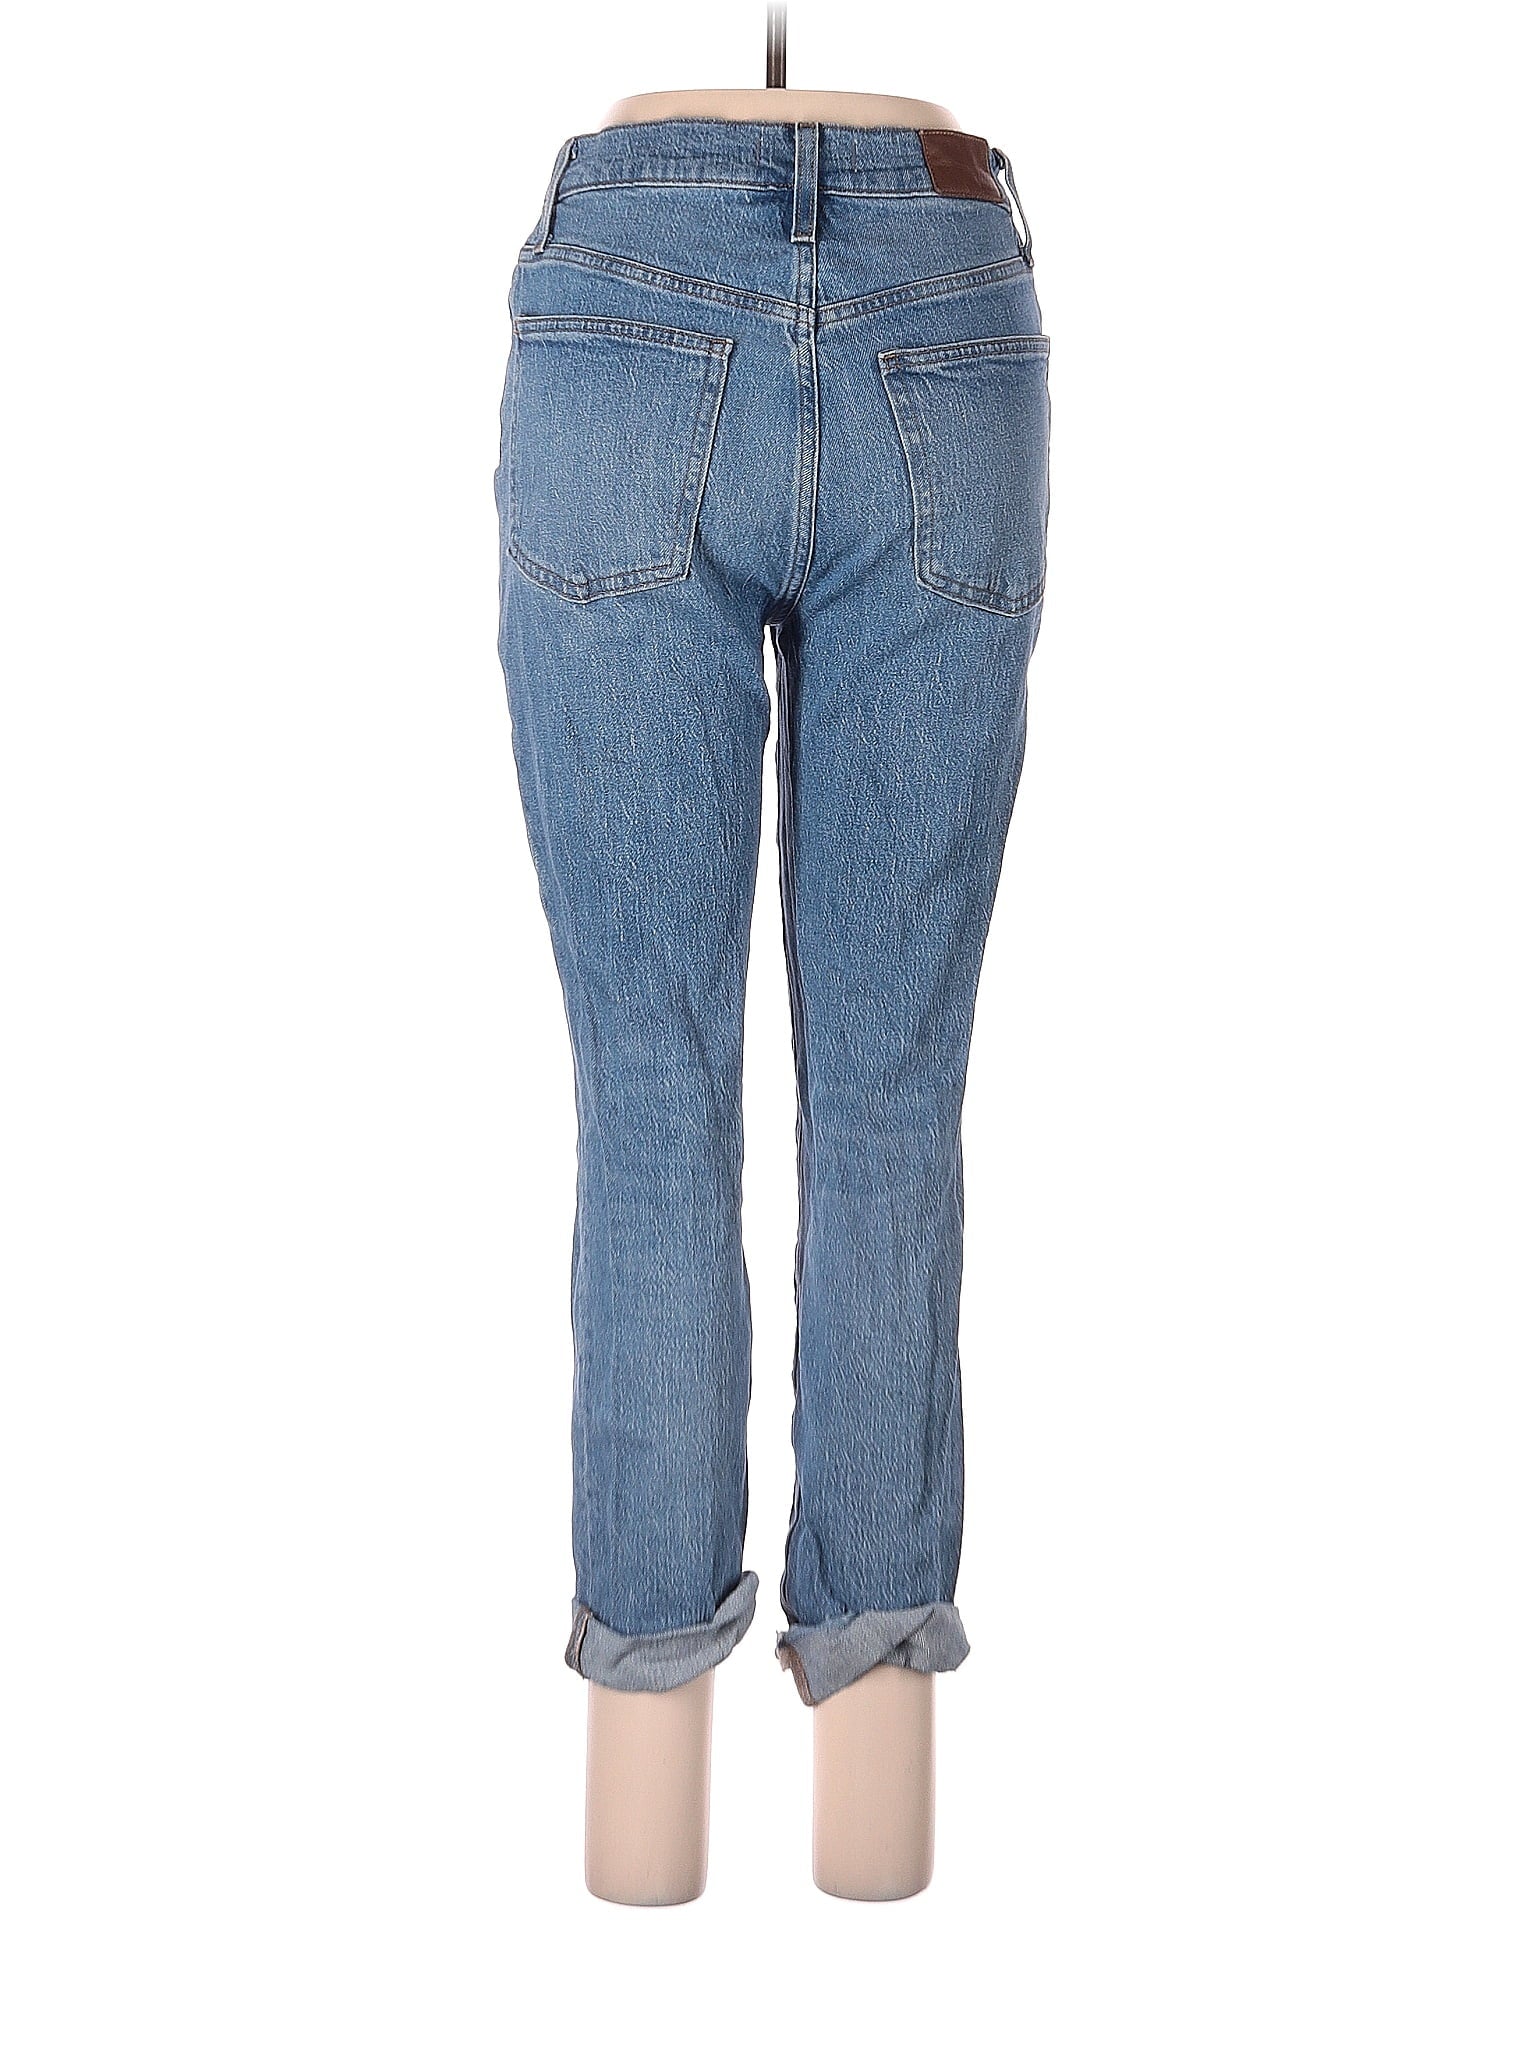 High-Rise Jeans waist size - 28